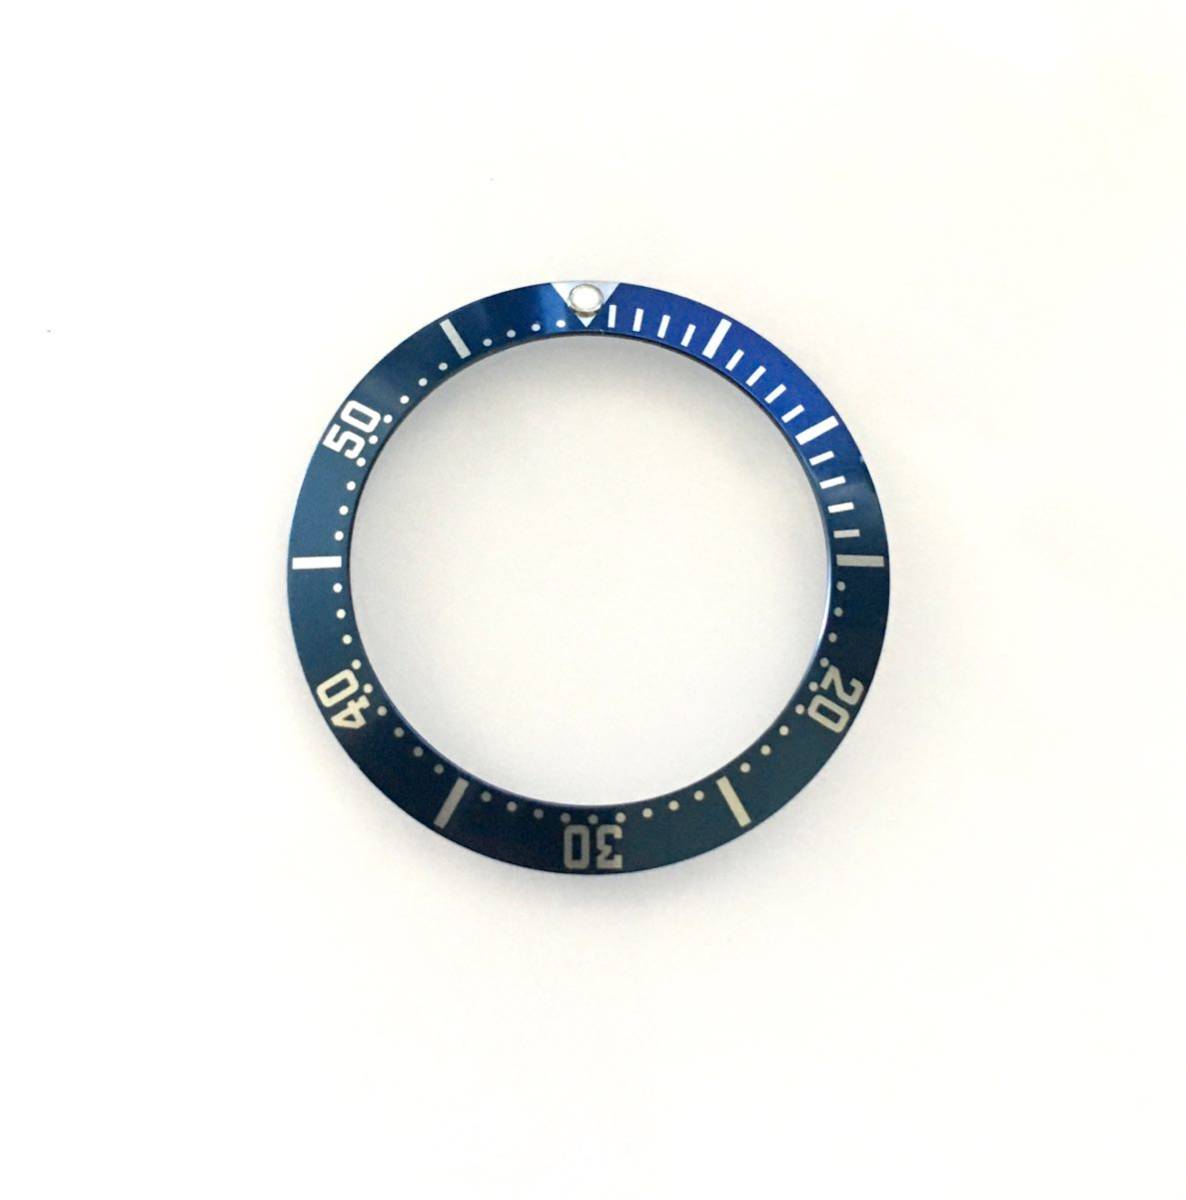 36mm ケース用 腕時計 修理交換用 社外部品 ベゼルインサート ブルー 